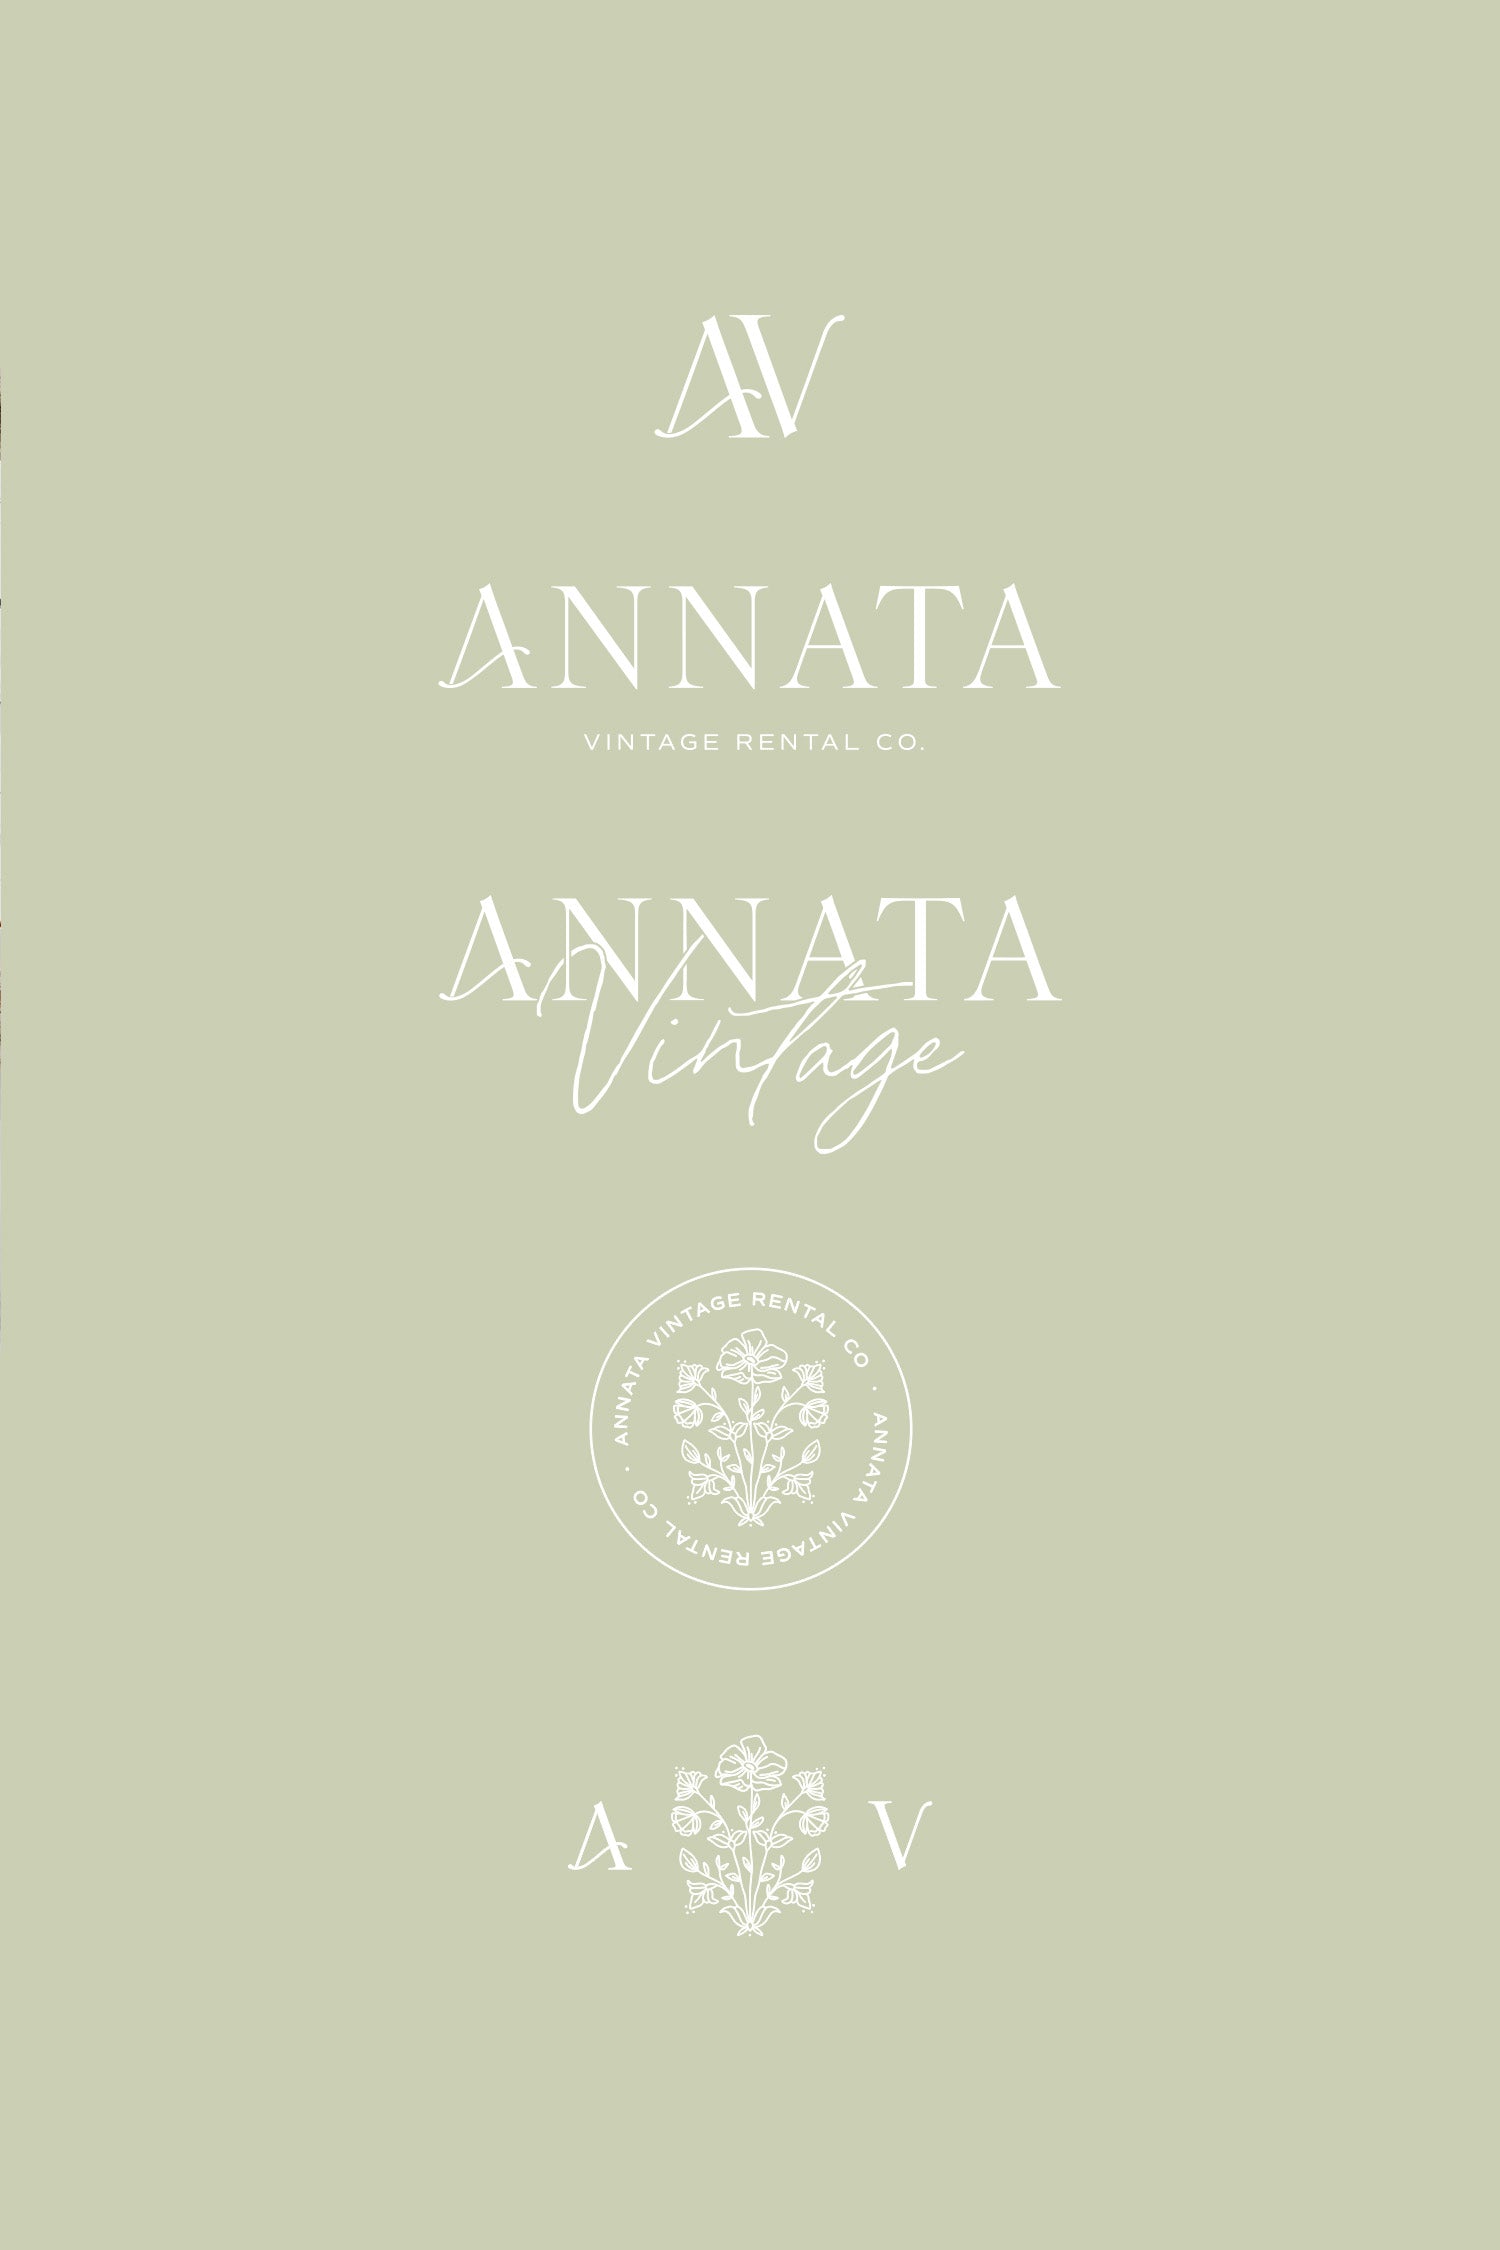 Annata Vintage Rental Co.